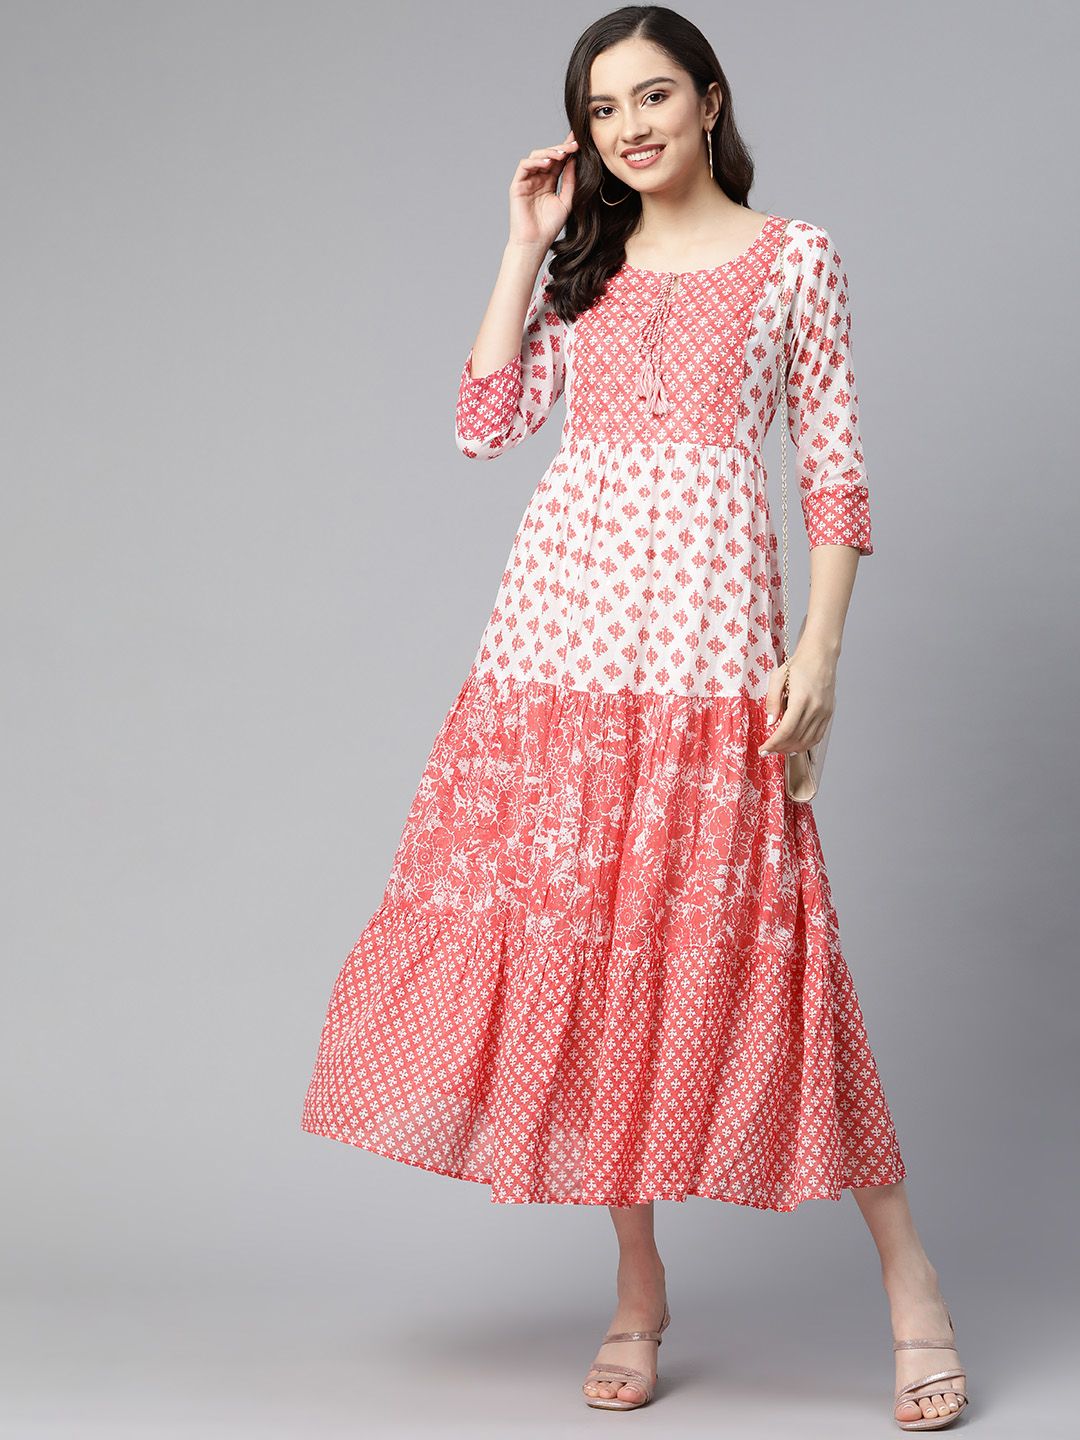 Readiprint Fashions White Ethnic Motifs Tie-Up Neck Maxi Dress Price in India